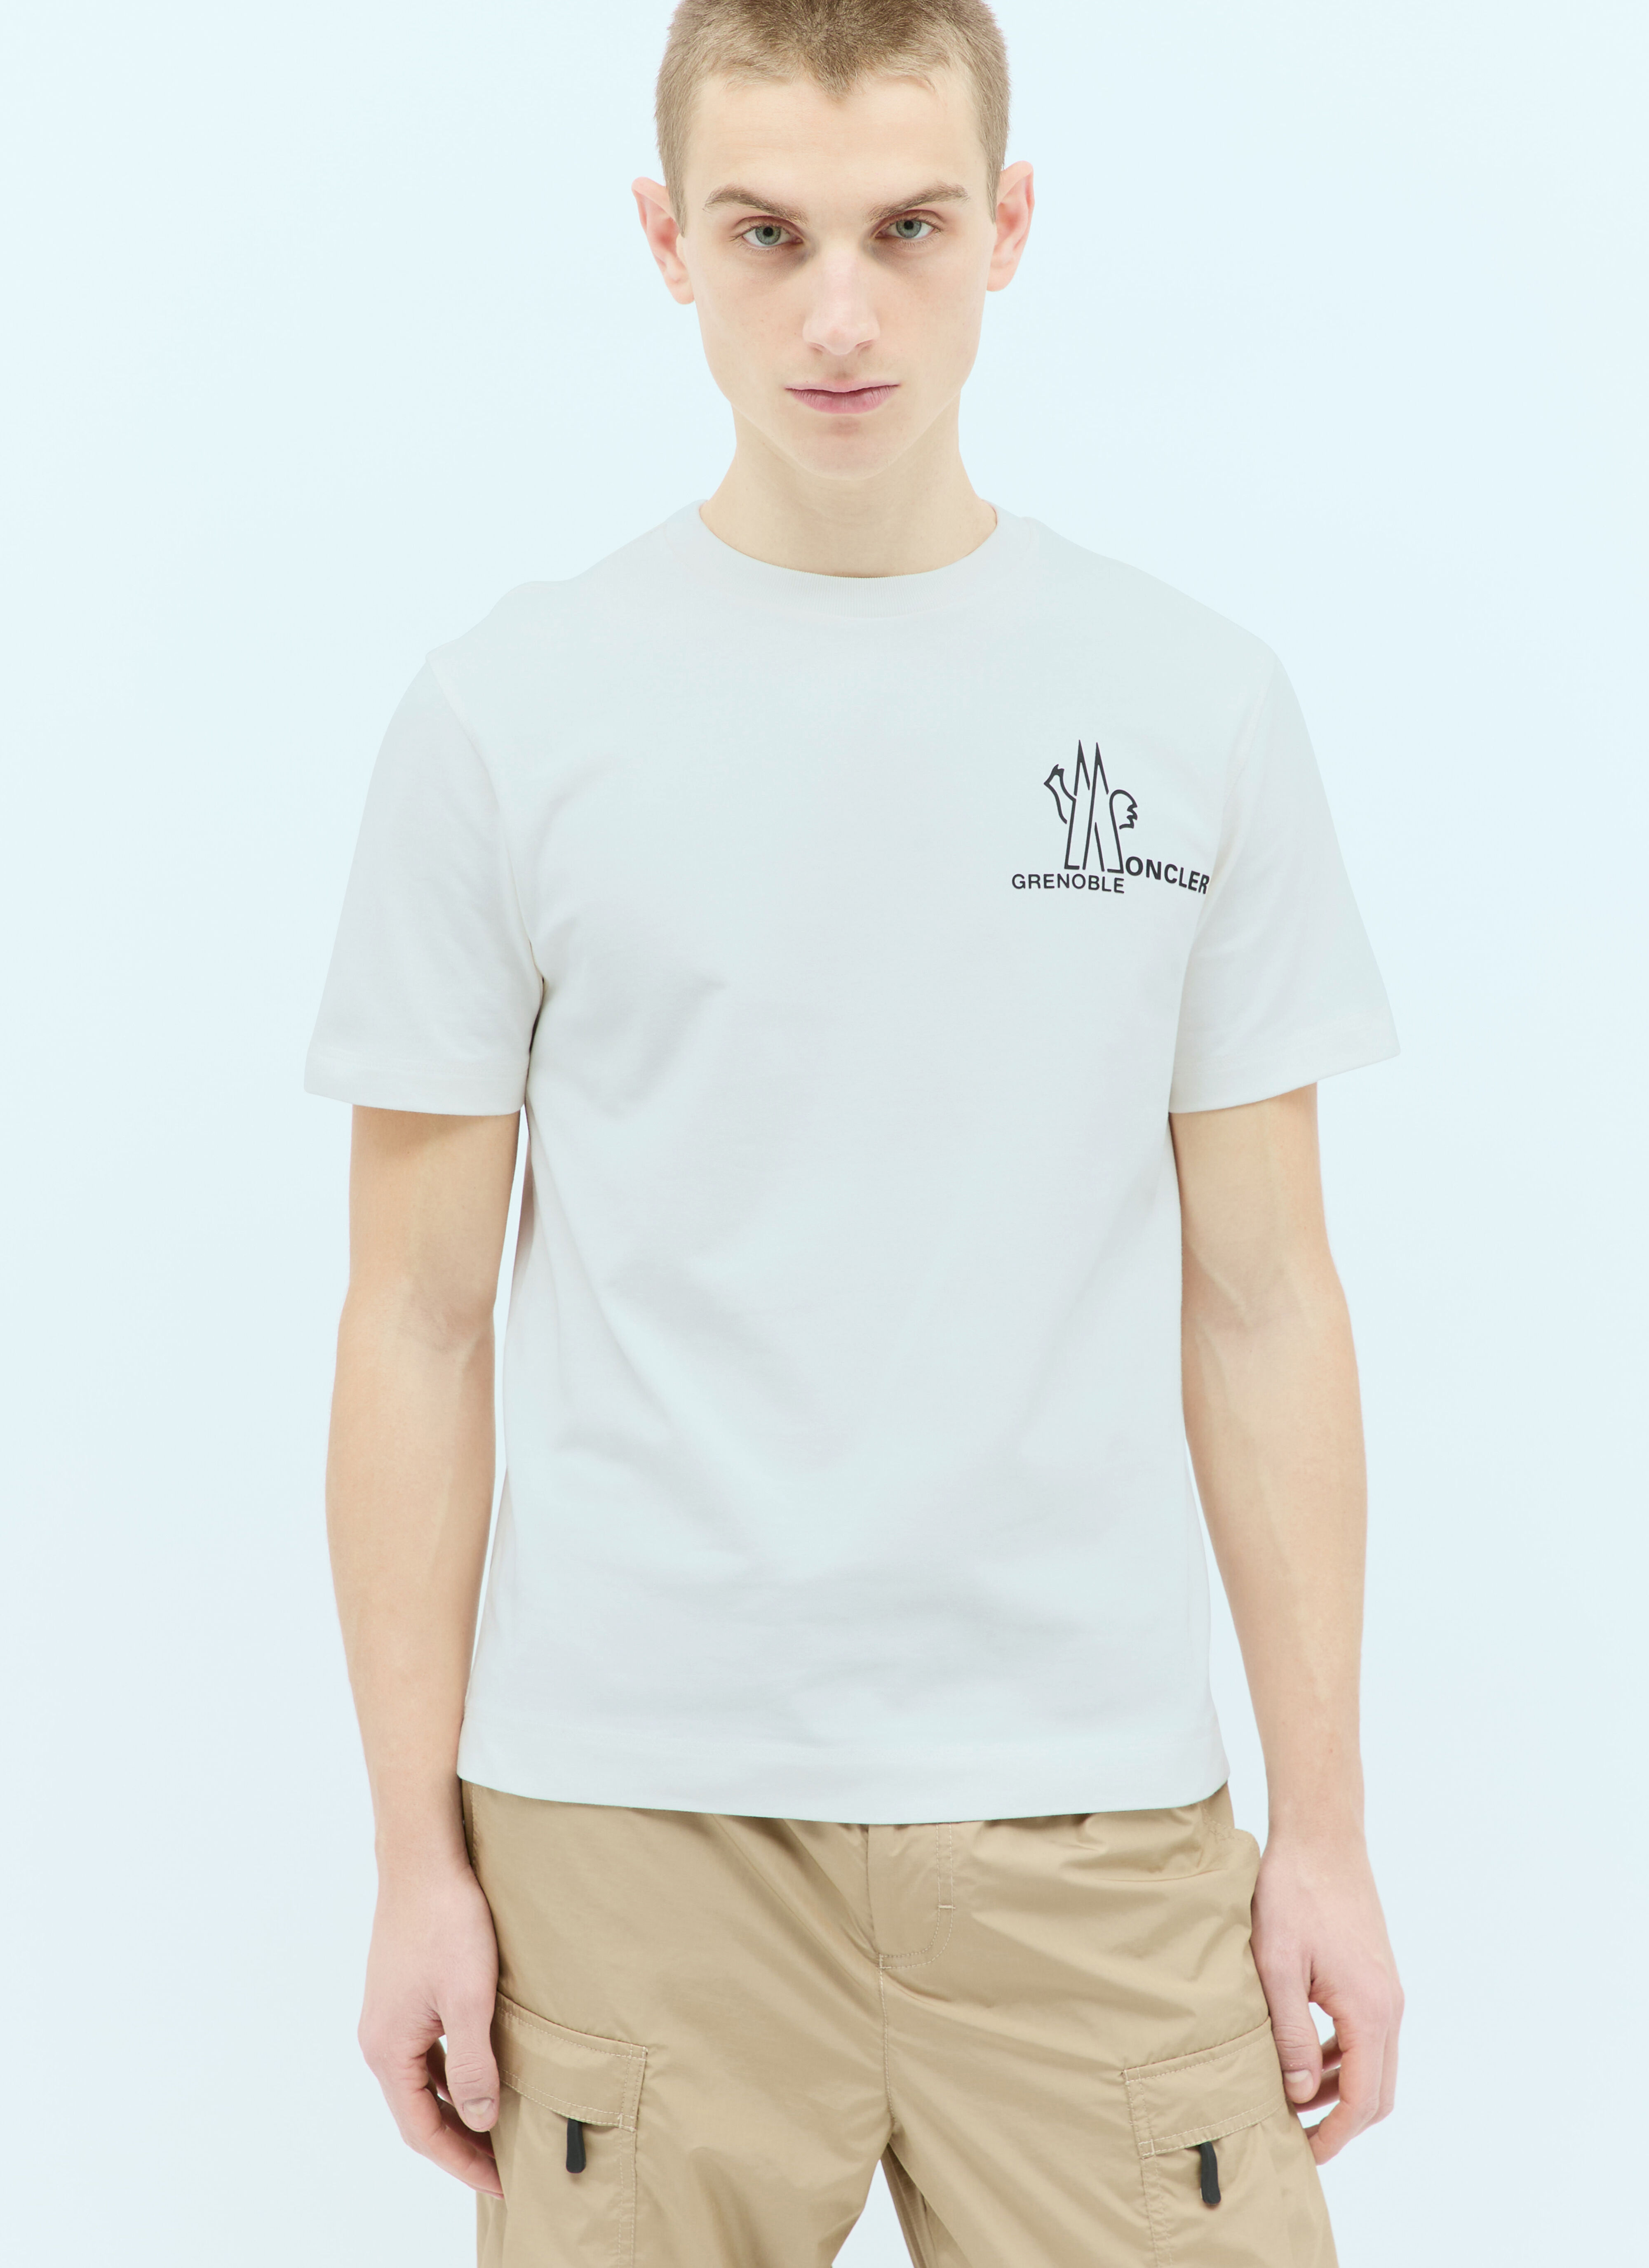 Moncler Grenoble Logo Applique T-Shirt Brown mog0155002